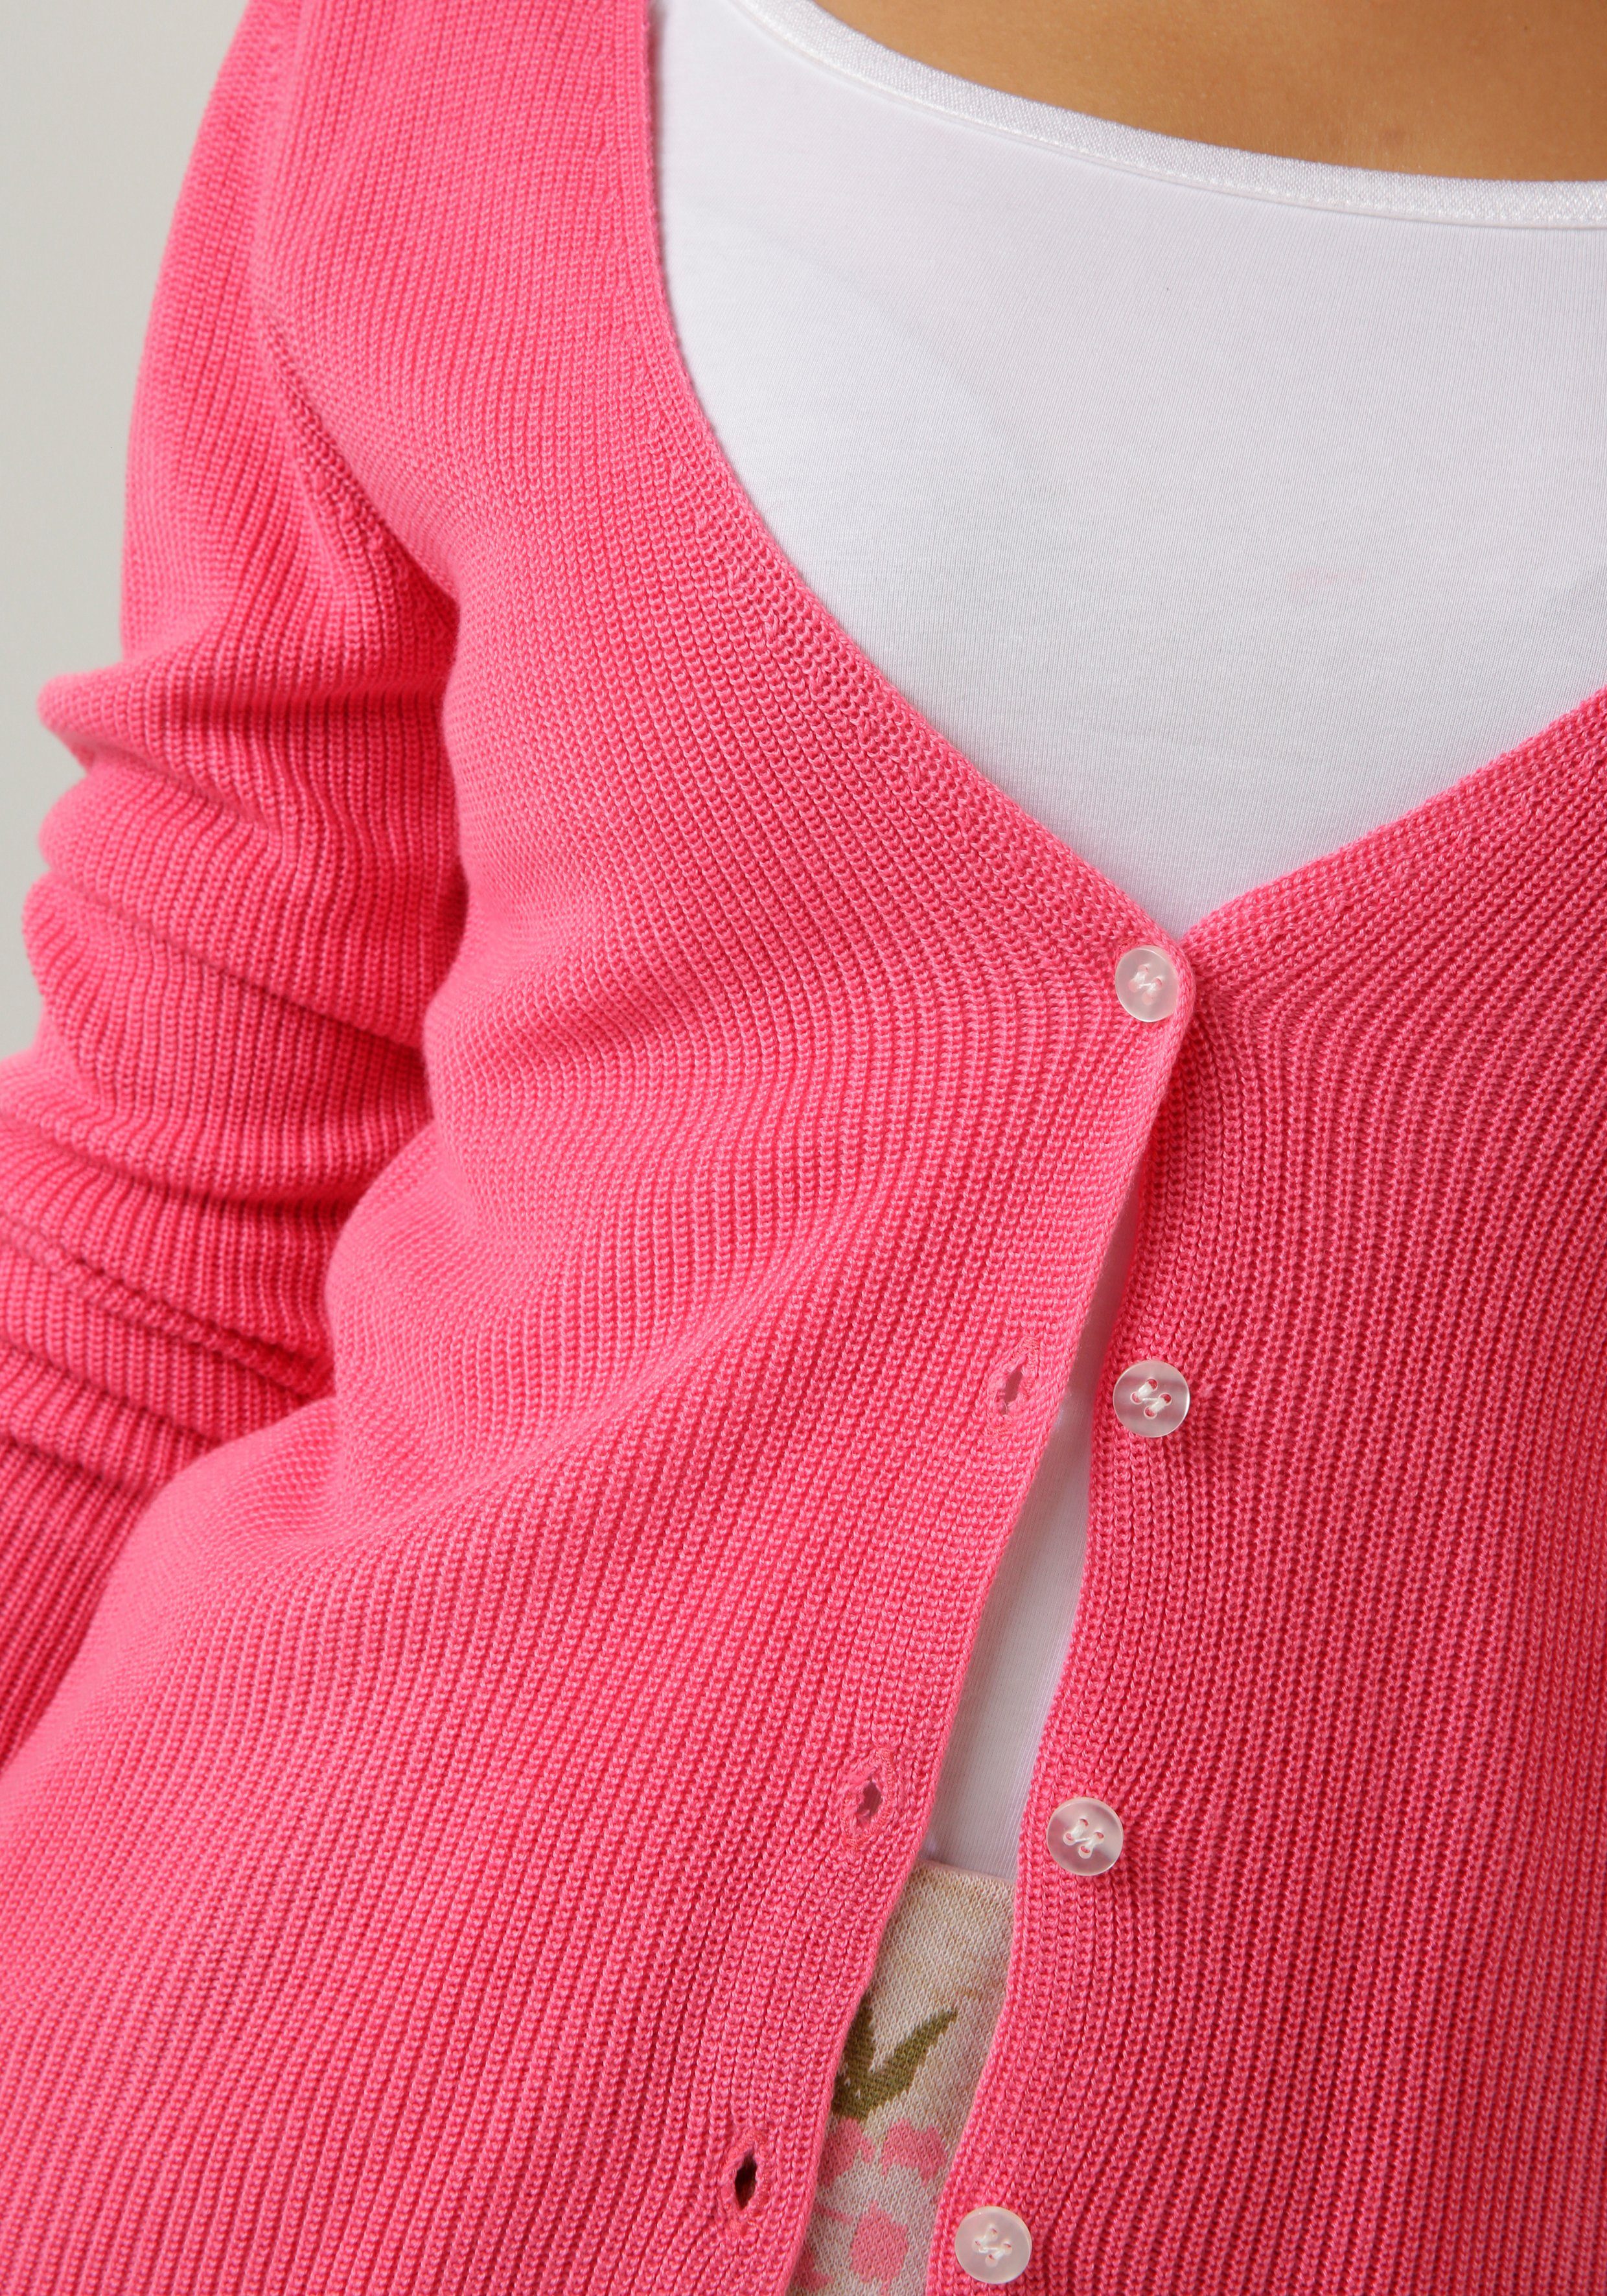 trendiger Strickjacke KOLLEKTION pink in CASUAL NEUE Aniston - Farbpalette